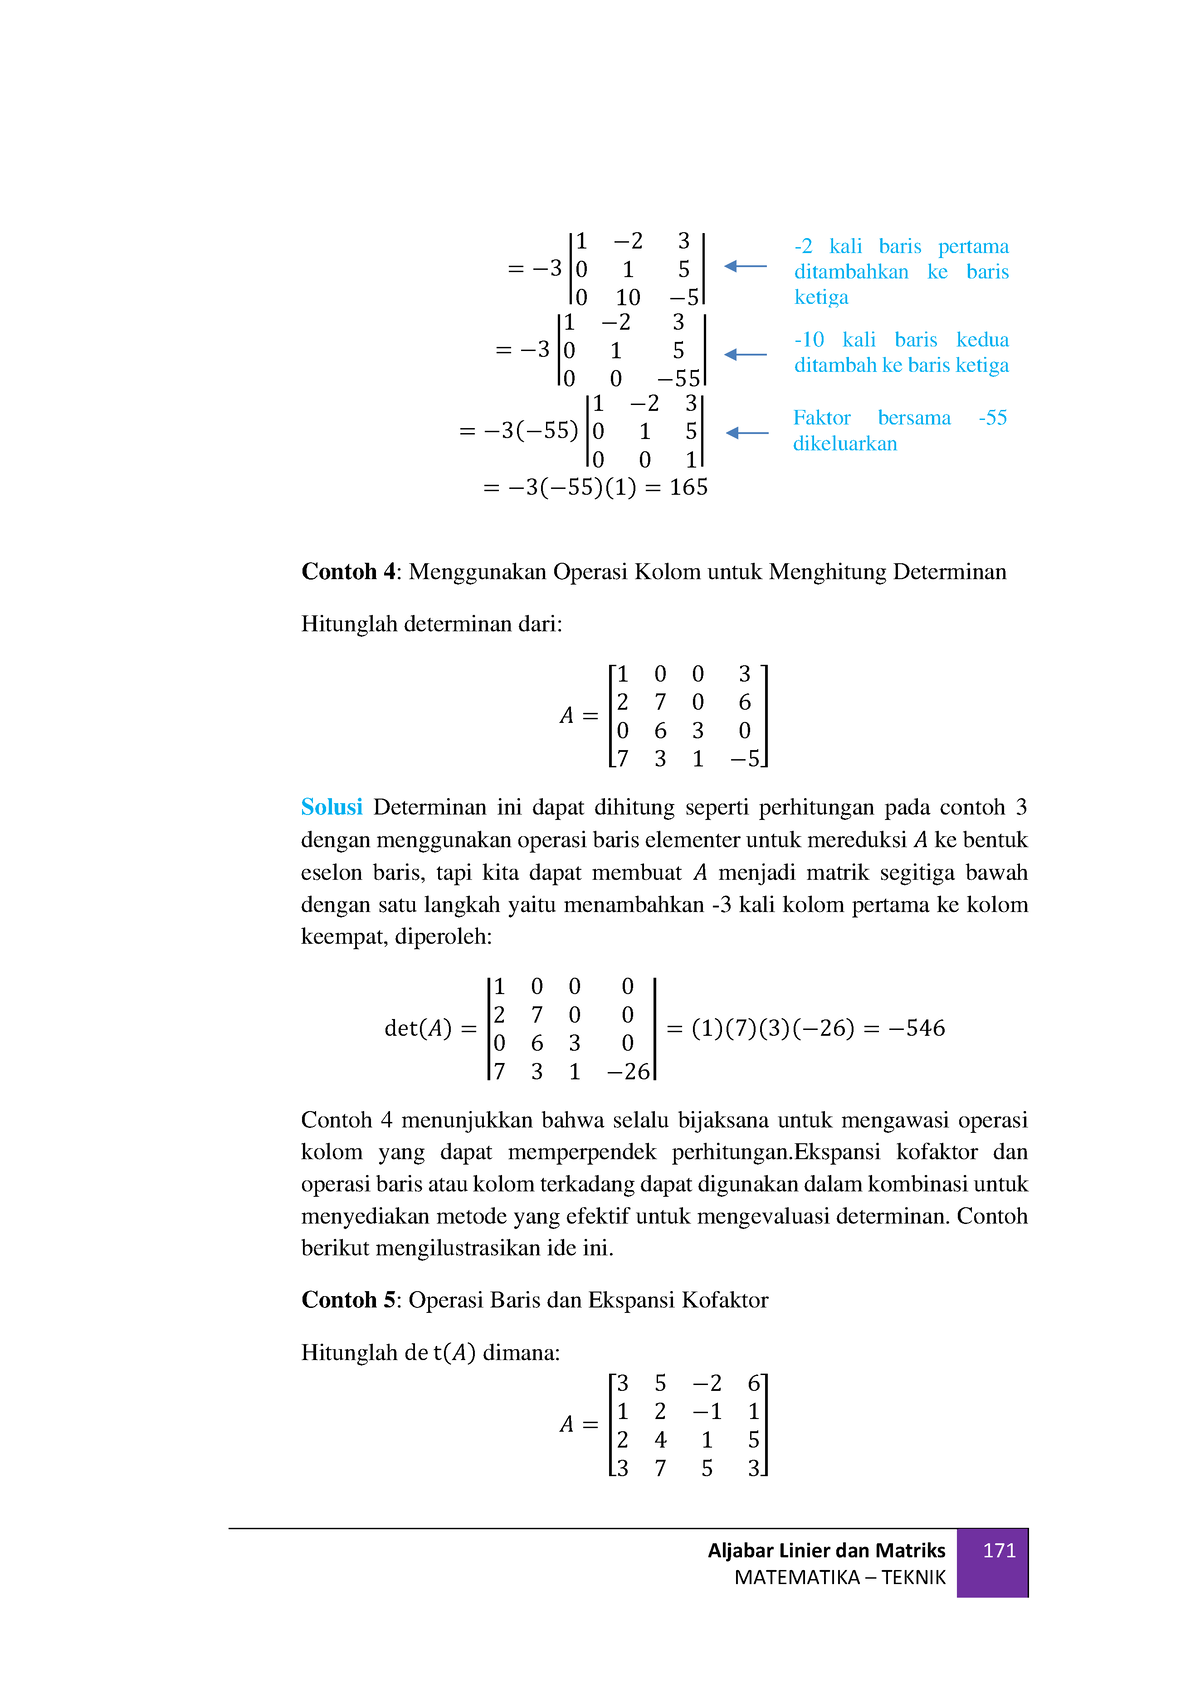 Aljabar Linier Dan Matrik Joko Soebagyo Et Aljabar Linier Dan Matriks Matematika Teknik 171 5456